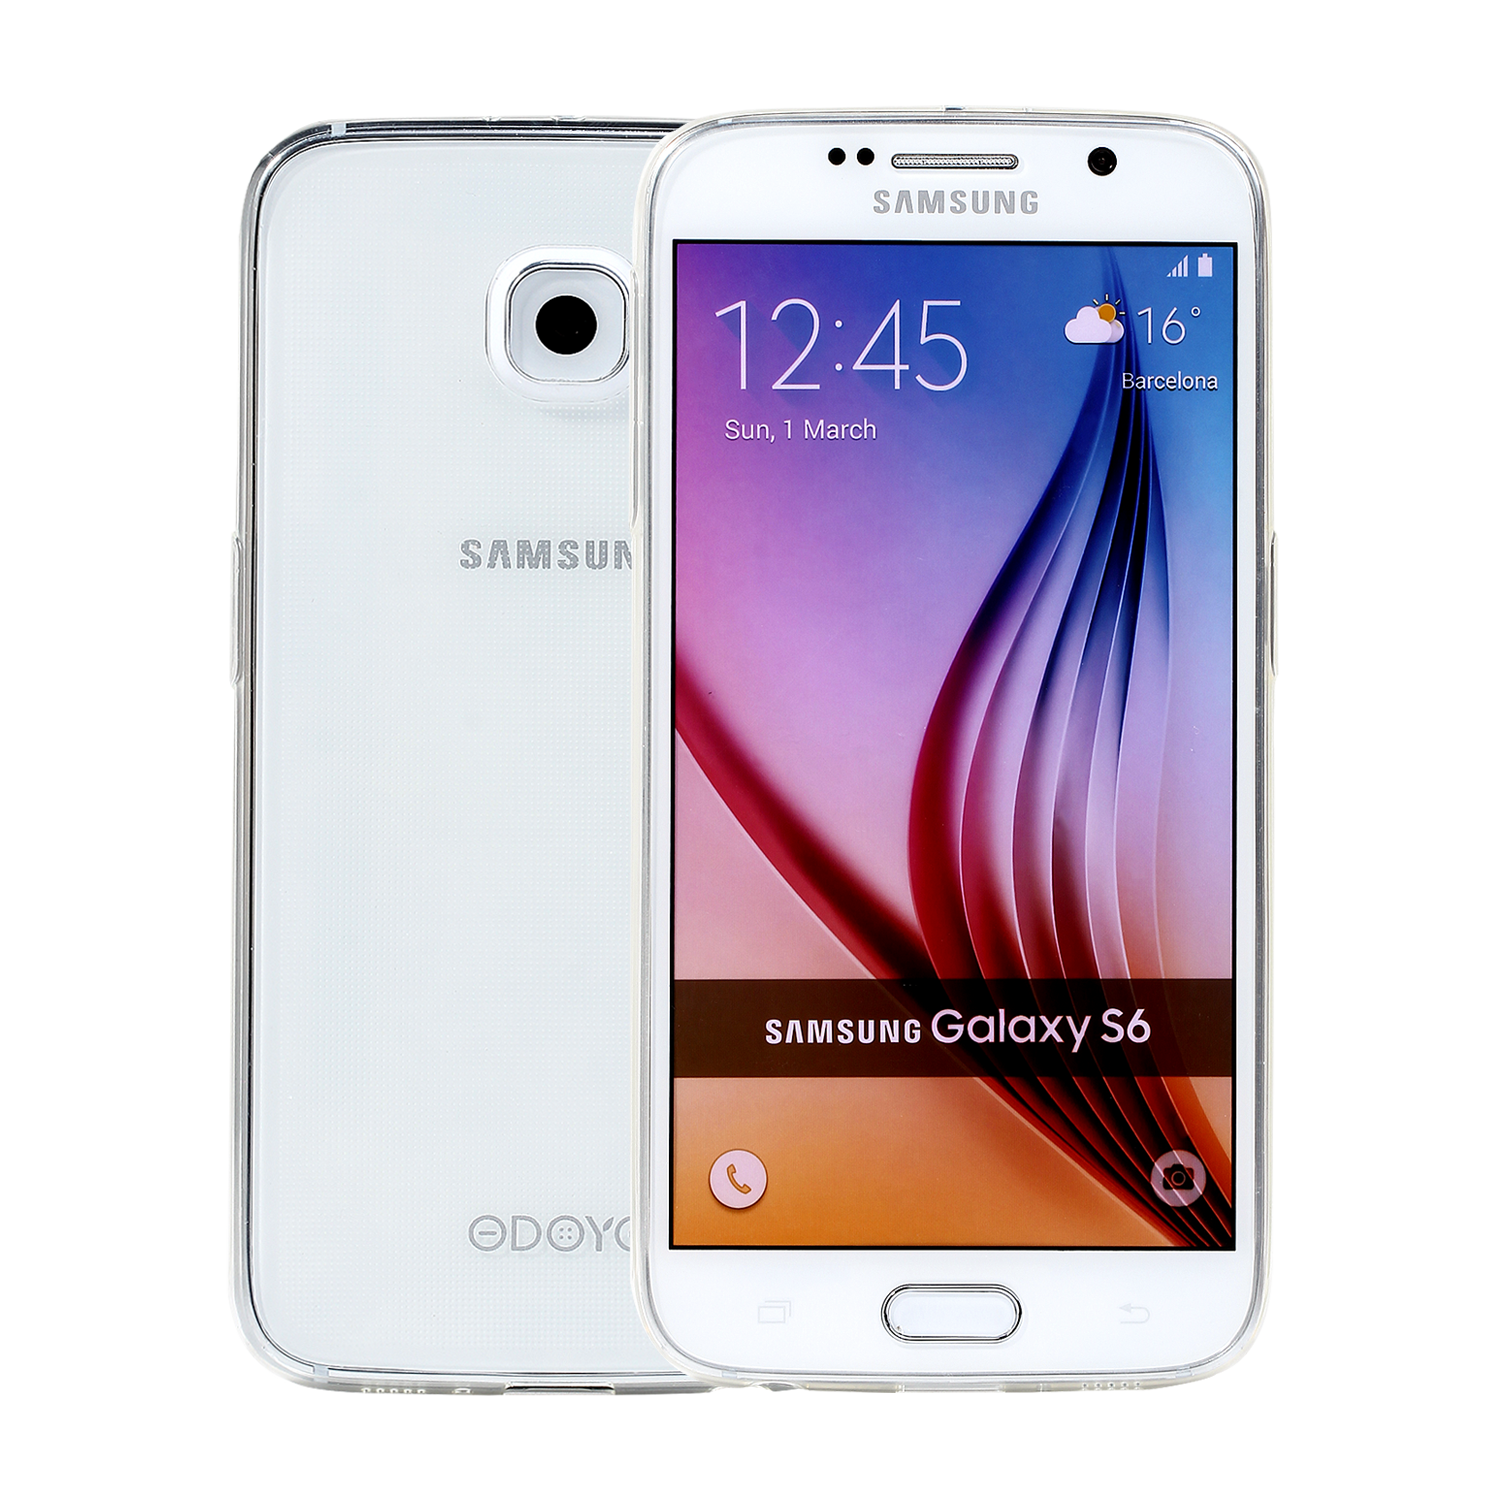 Samsung Mobile Phone PNG Transparent Images.